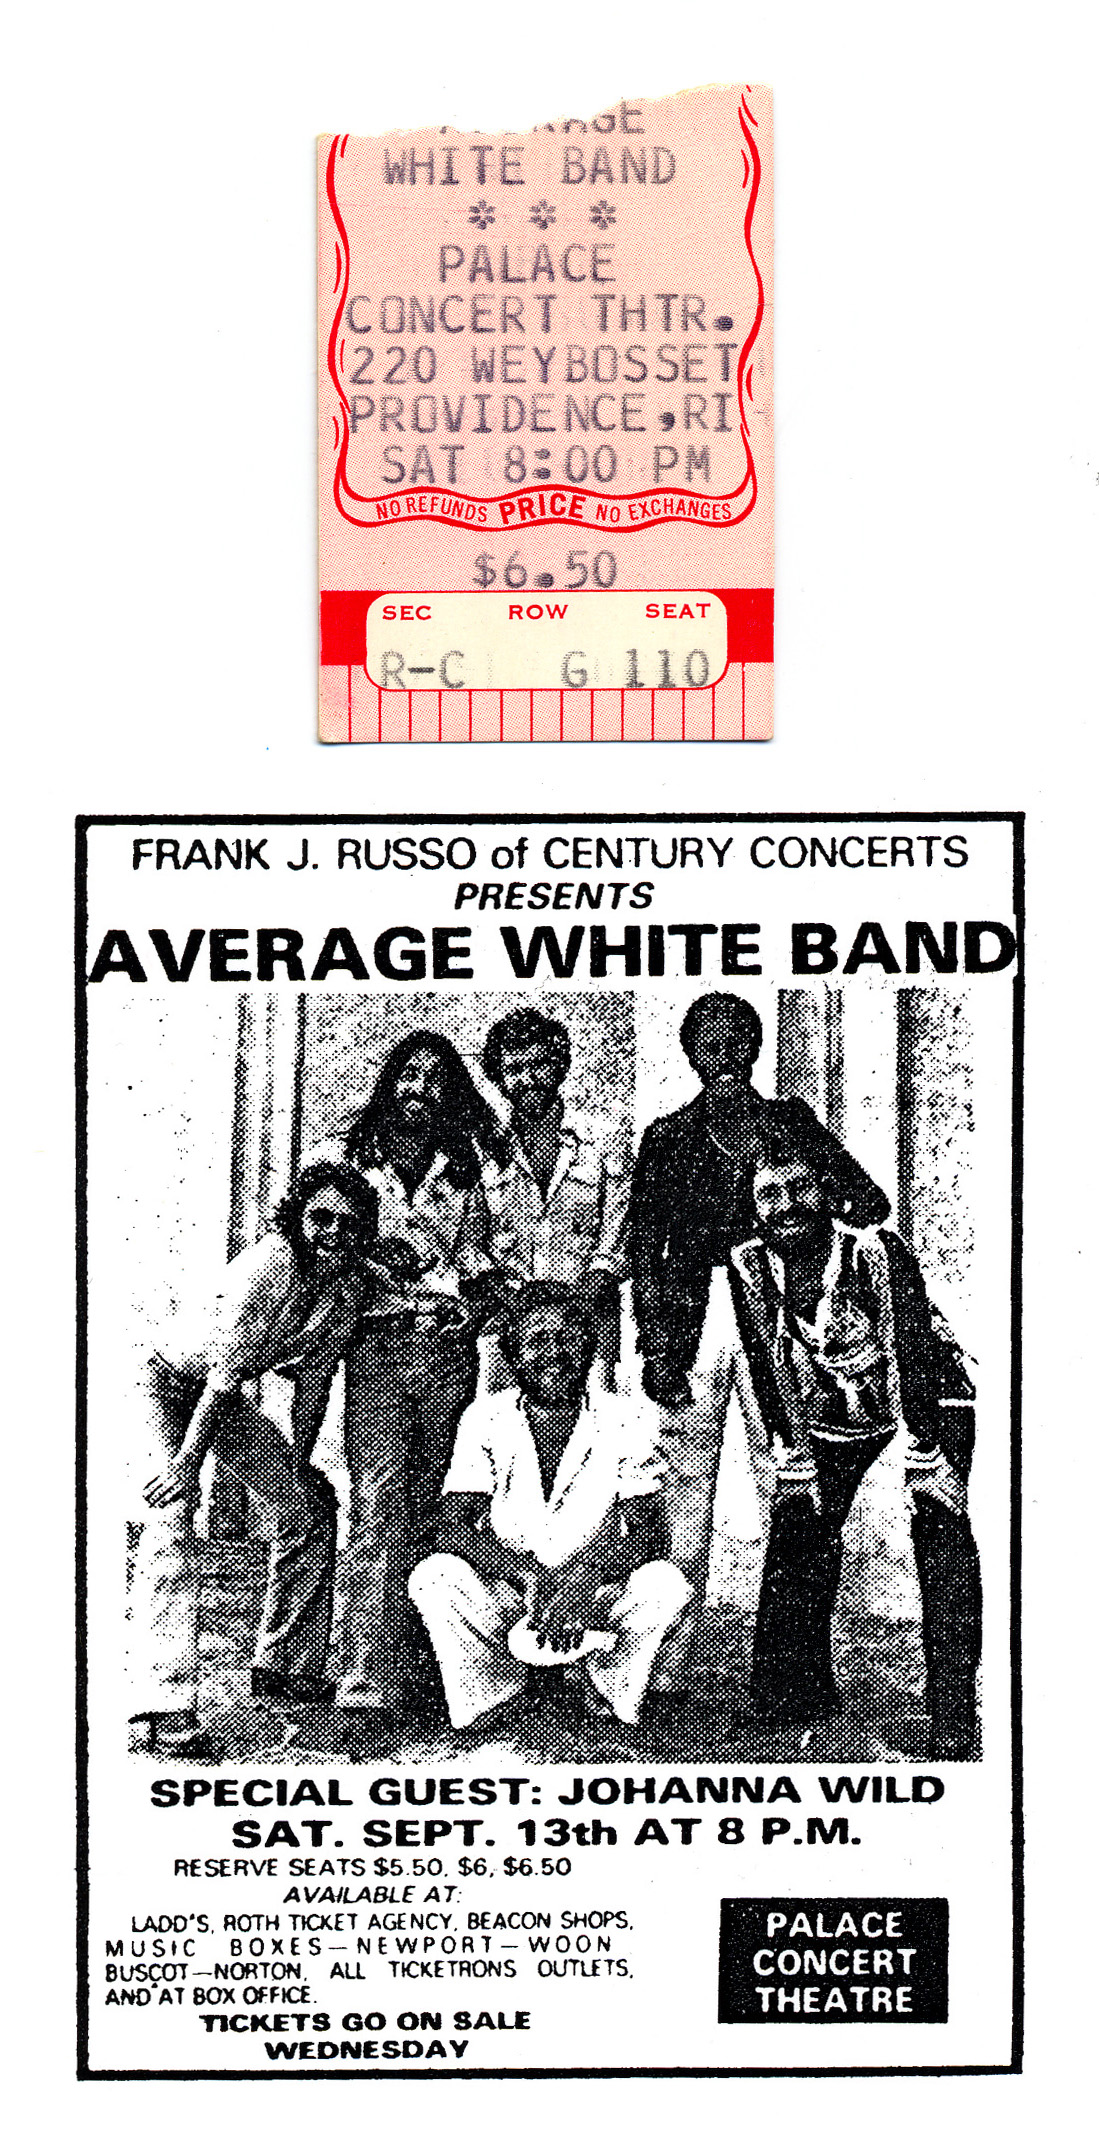 AverageWhiteBand1975-09-13PalaceTheaterProvidenceRI (1).jpg